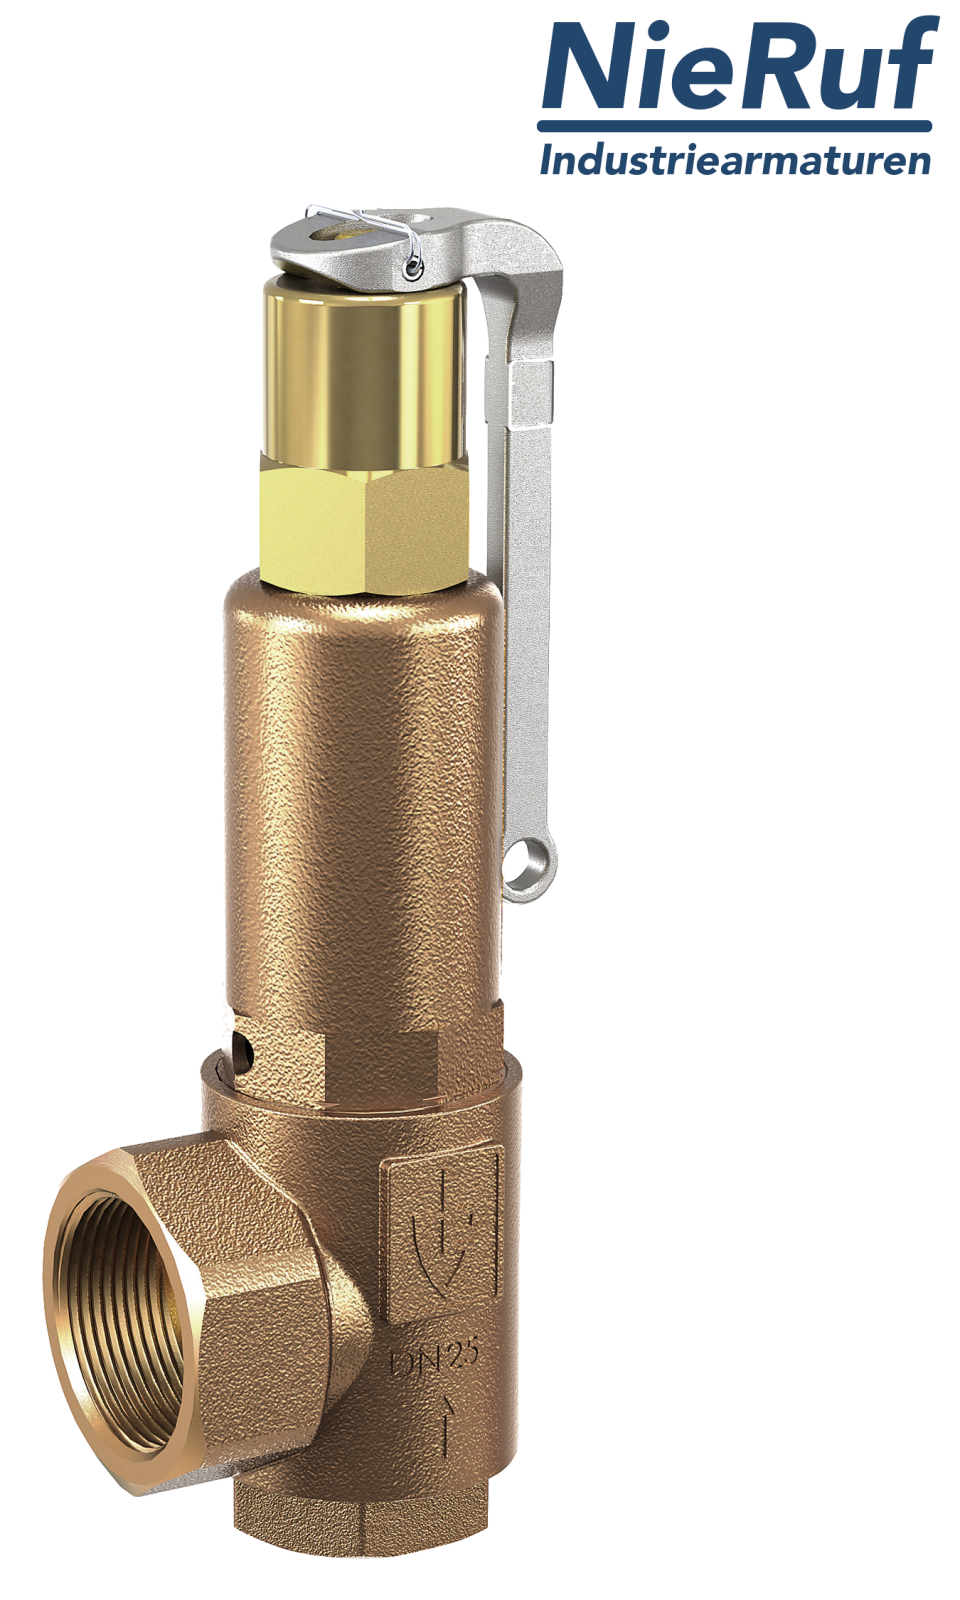 safety valve 1 1/2" x 2" fm SV07 neutral gaseous media, gunmetal PTFE, with lever